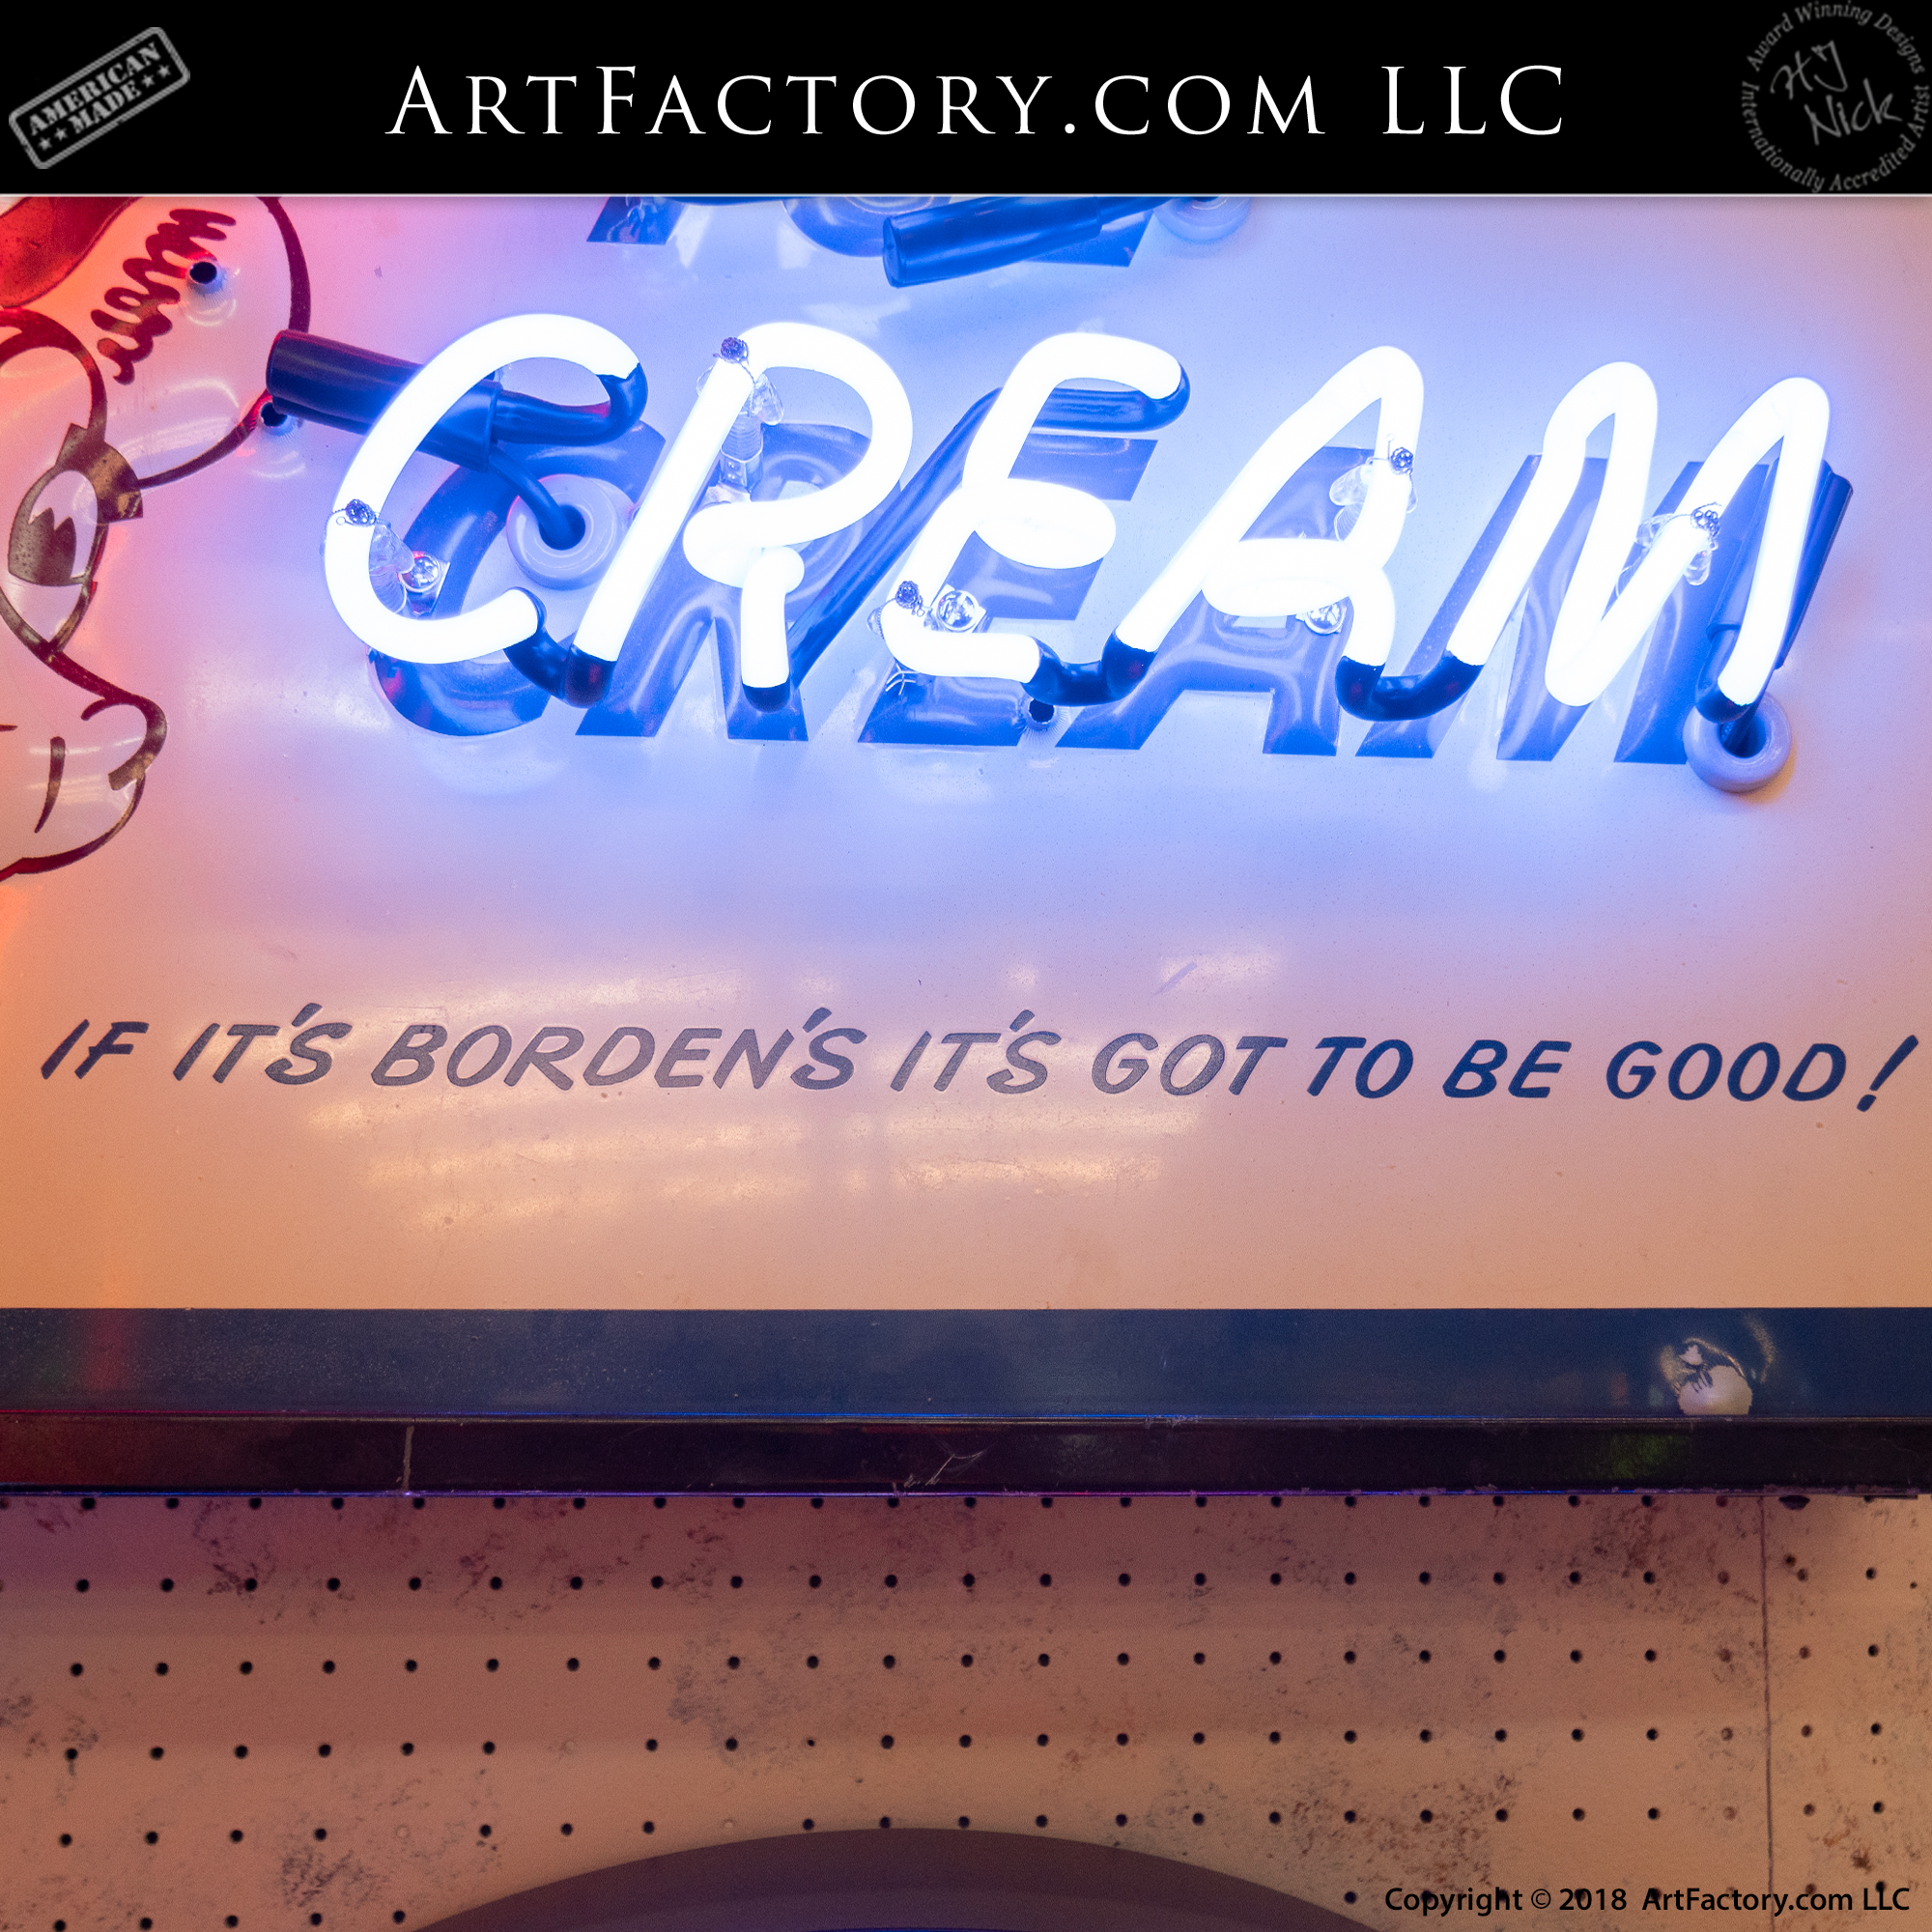 Vintage neon Borden Ice Cream Sign